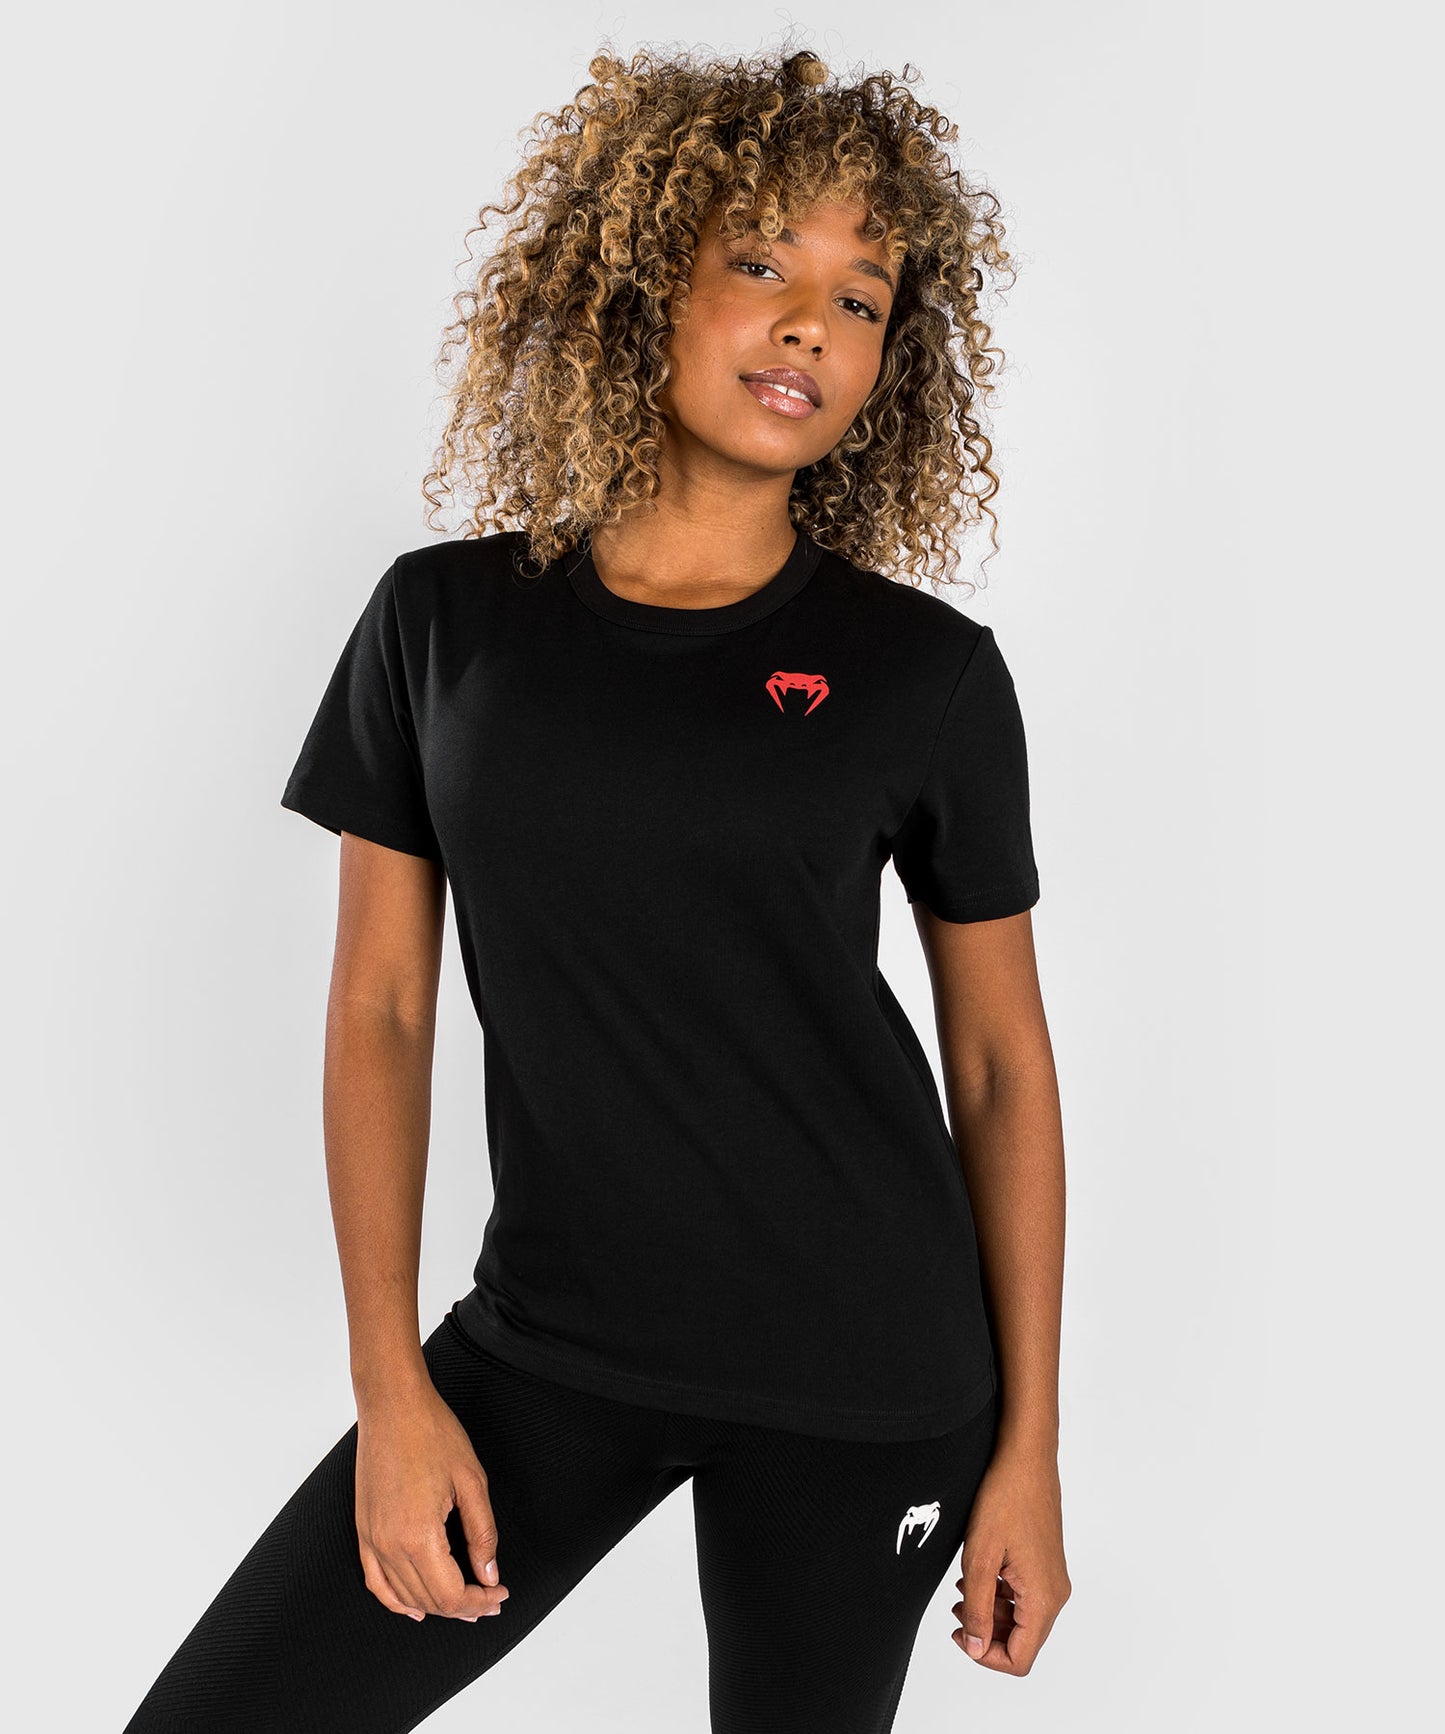 Venum x Dodge Banshee Women's T-Shirt - Black